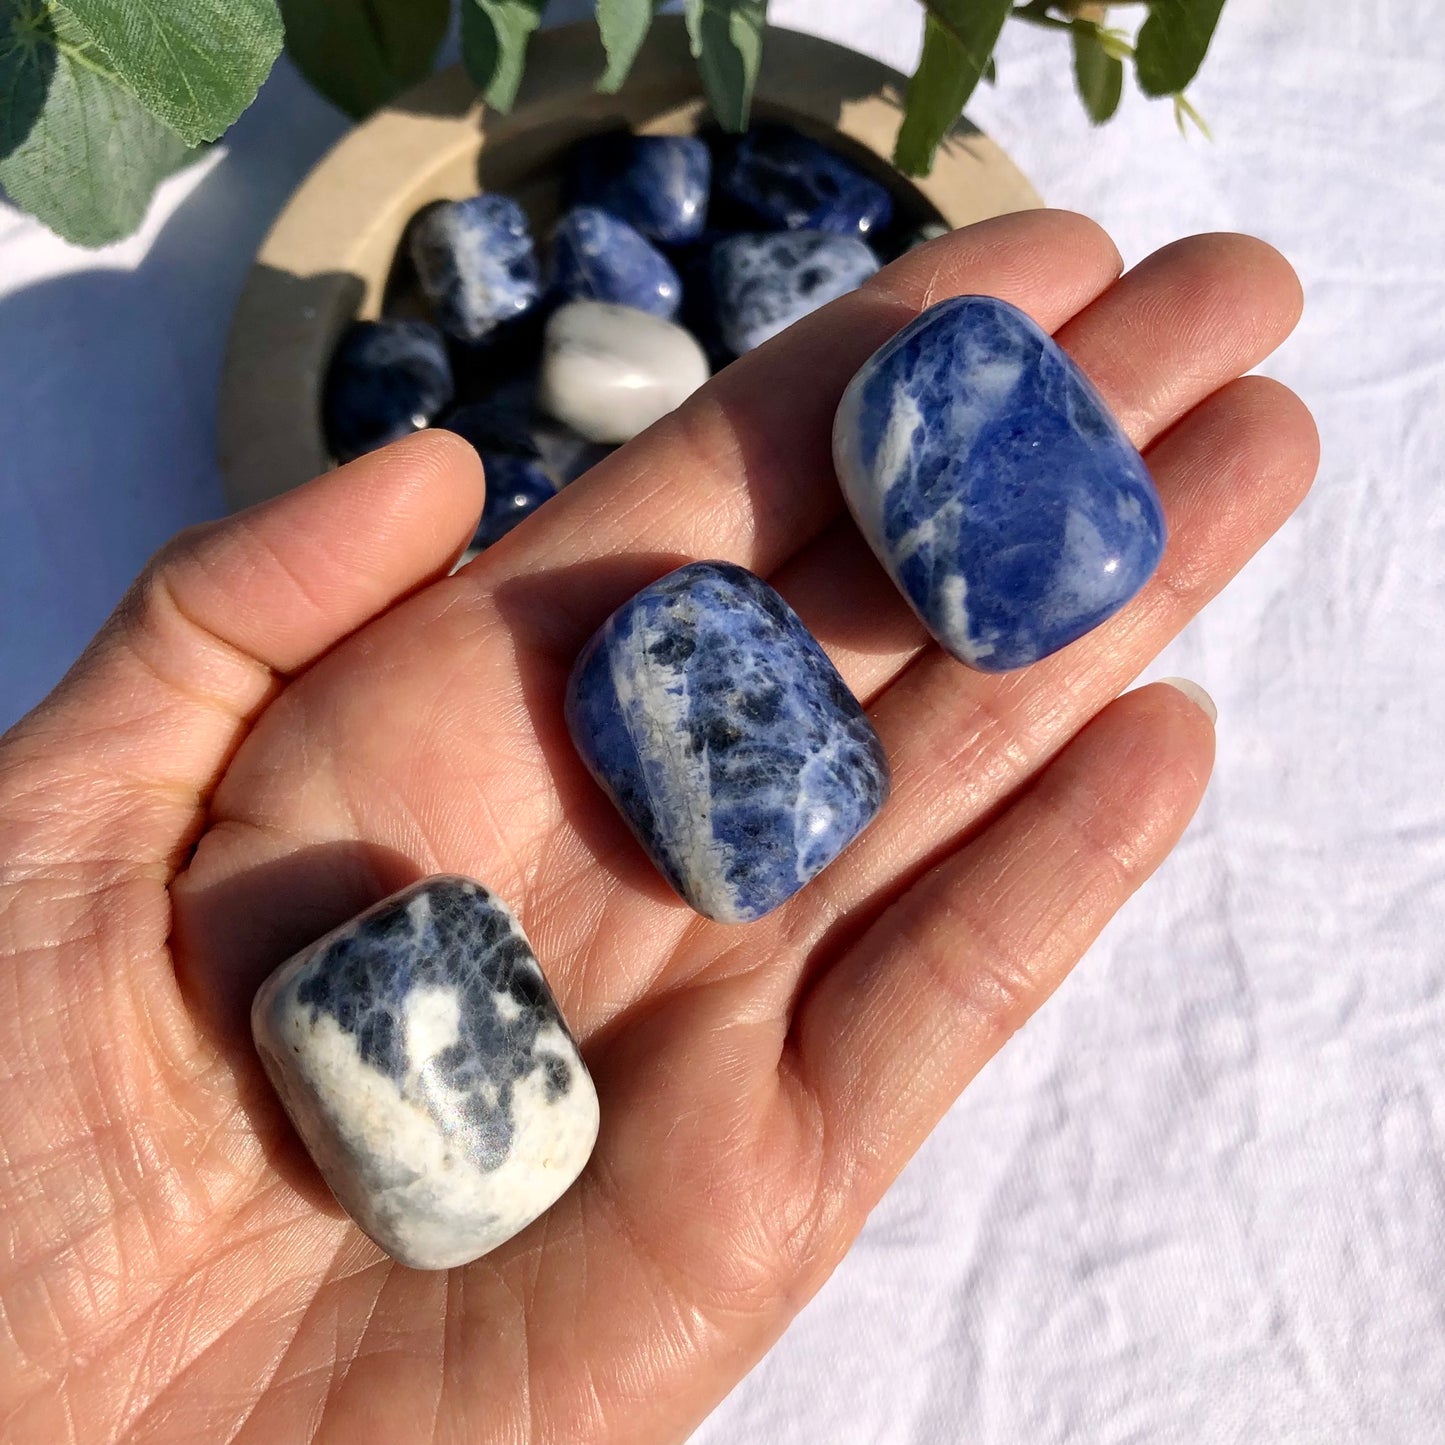 extra large Blue and white sodalite healing crystal tumble stones